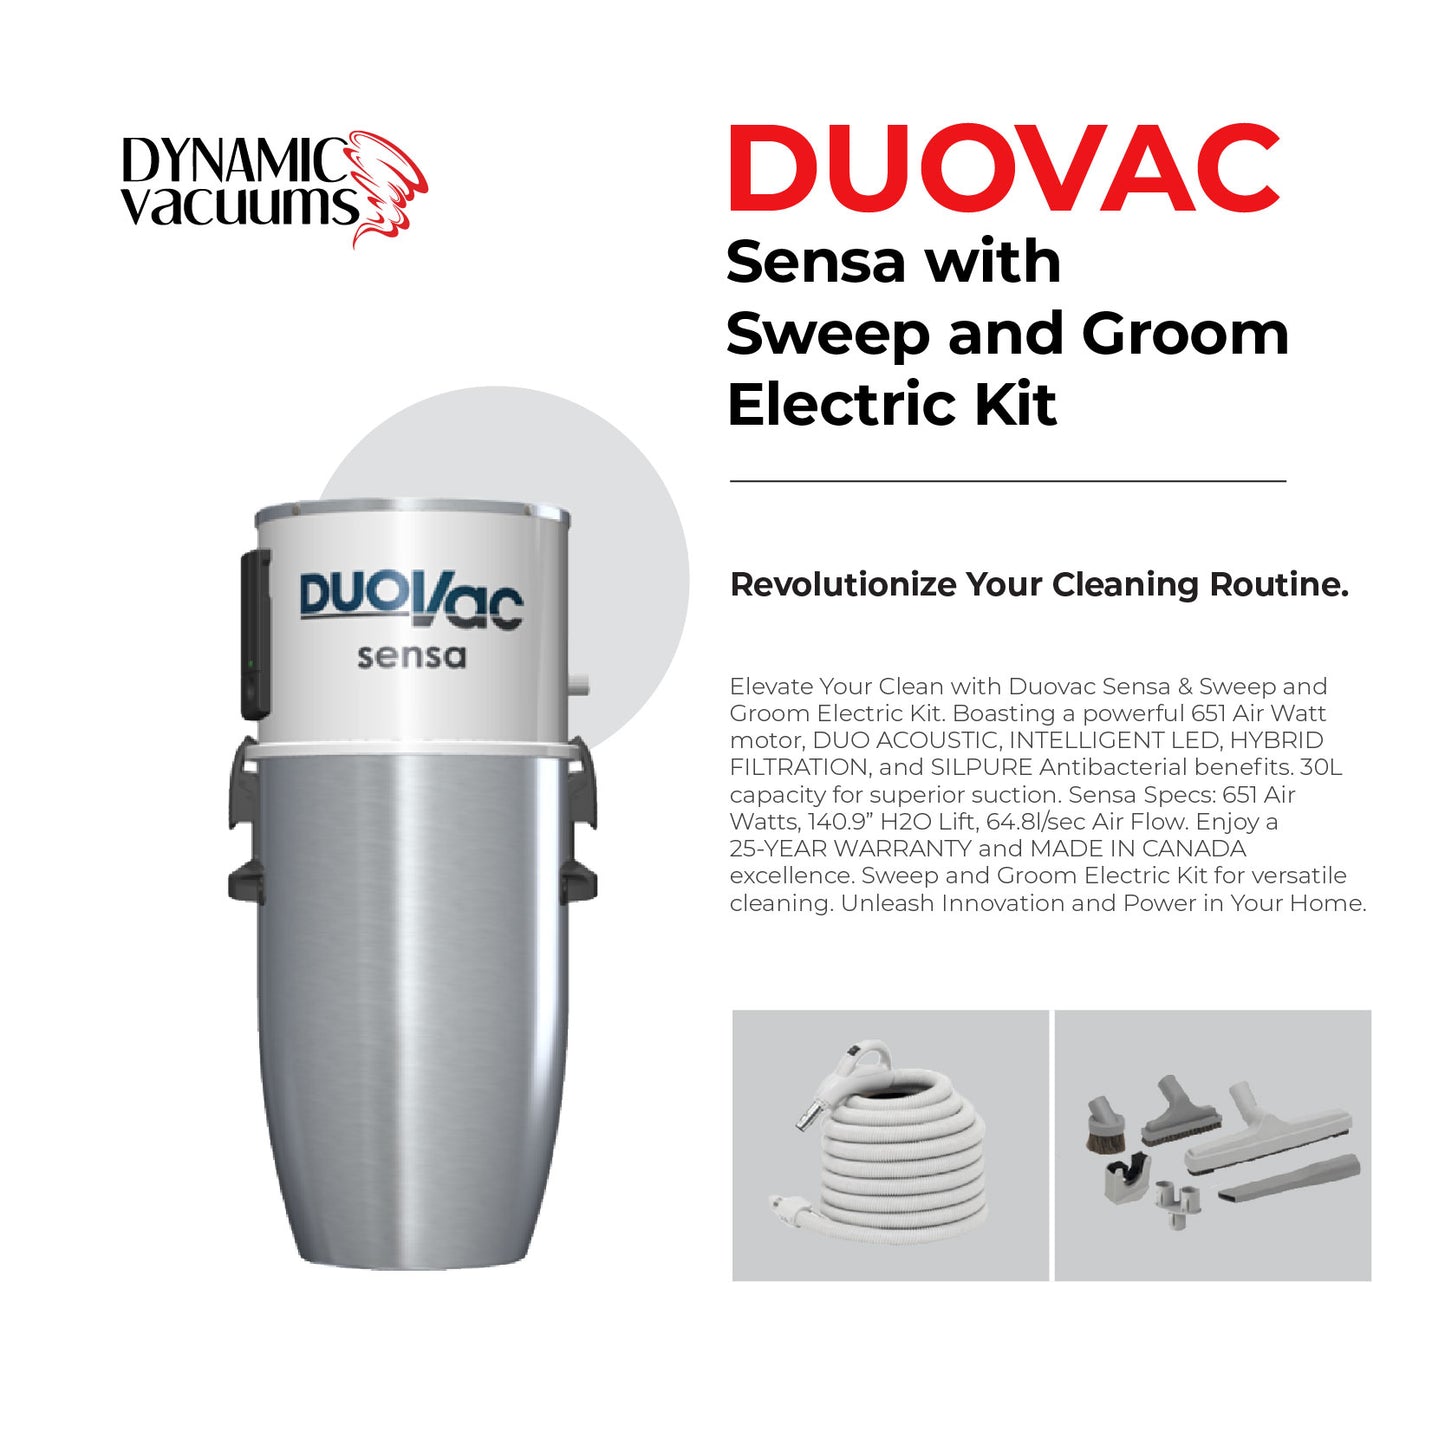 Duovac Sensa with Sweep and Groom Electric Kit